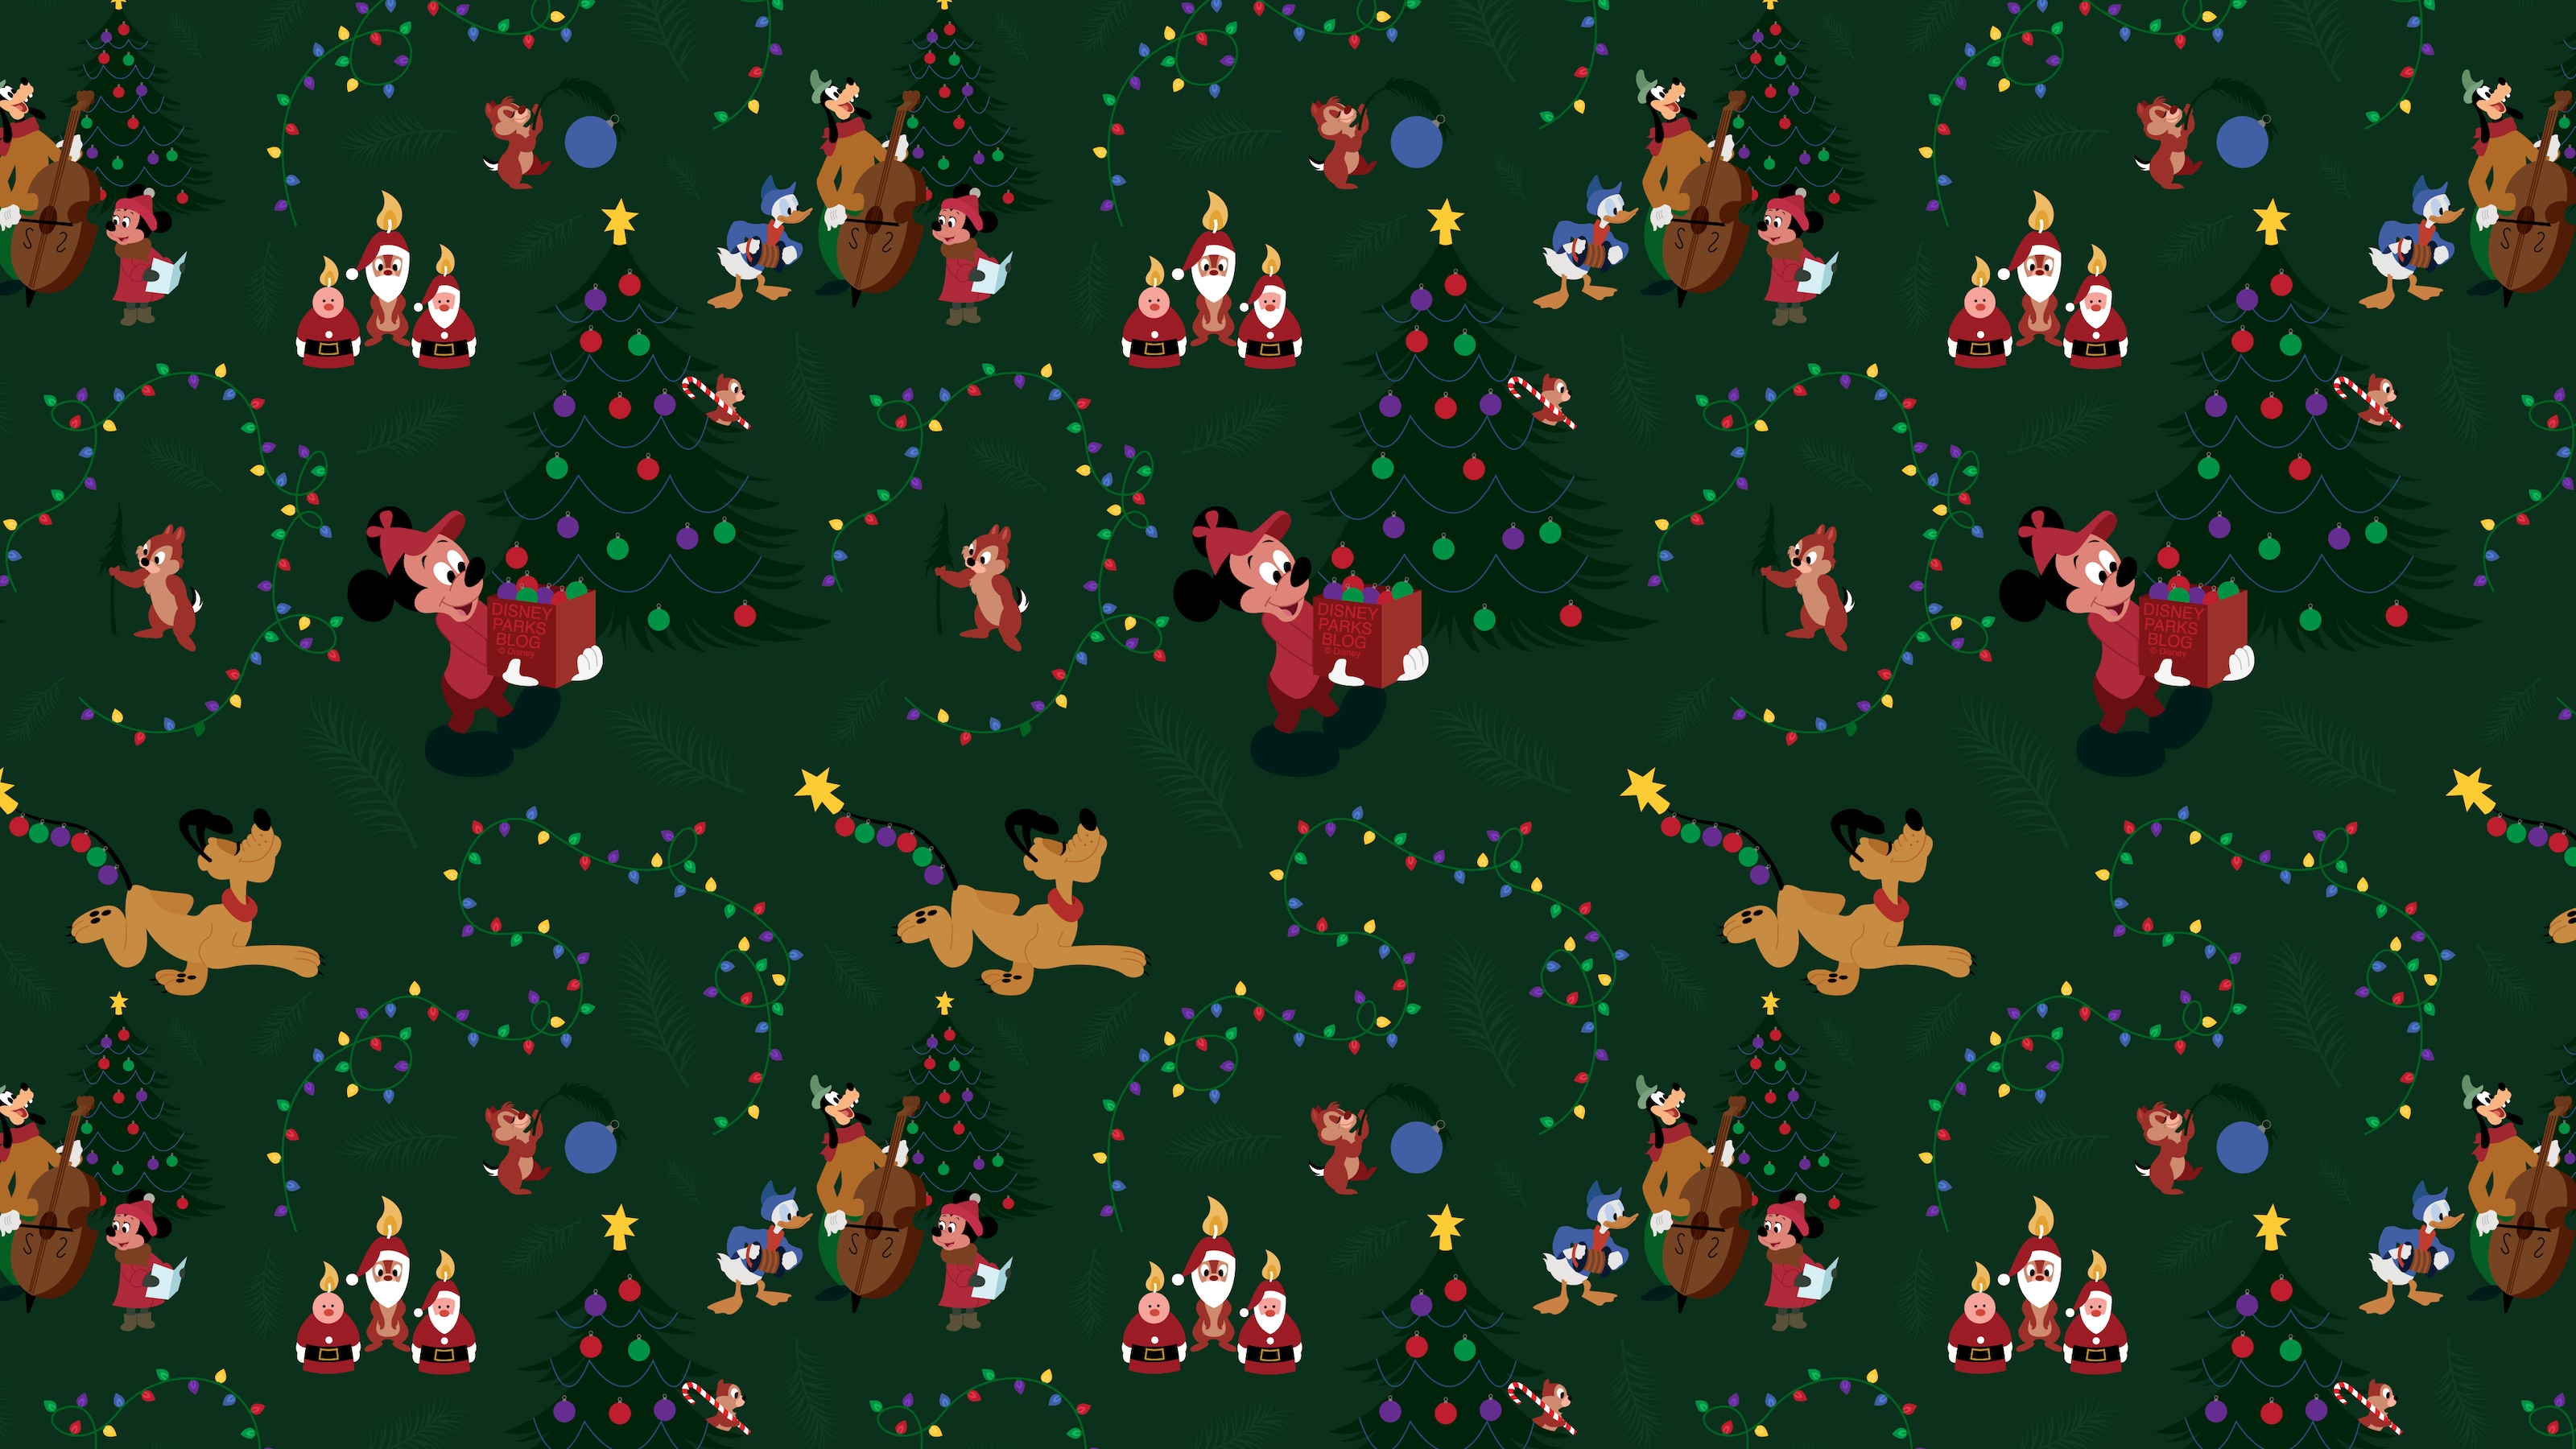 2019 Mickey Mouse Pluto Christmas Wallpaper Desktop Ipad Disney Parks Blog